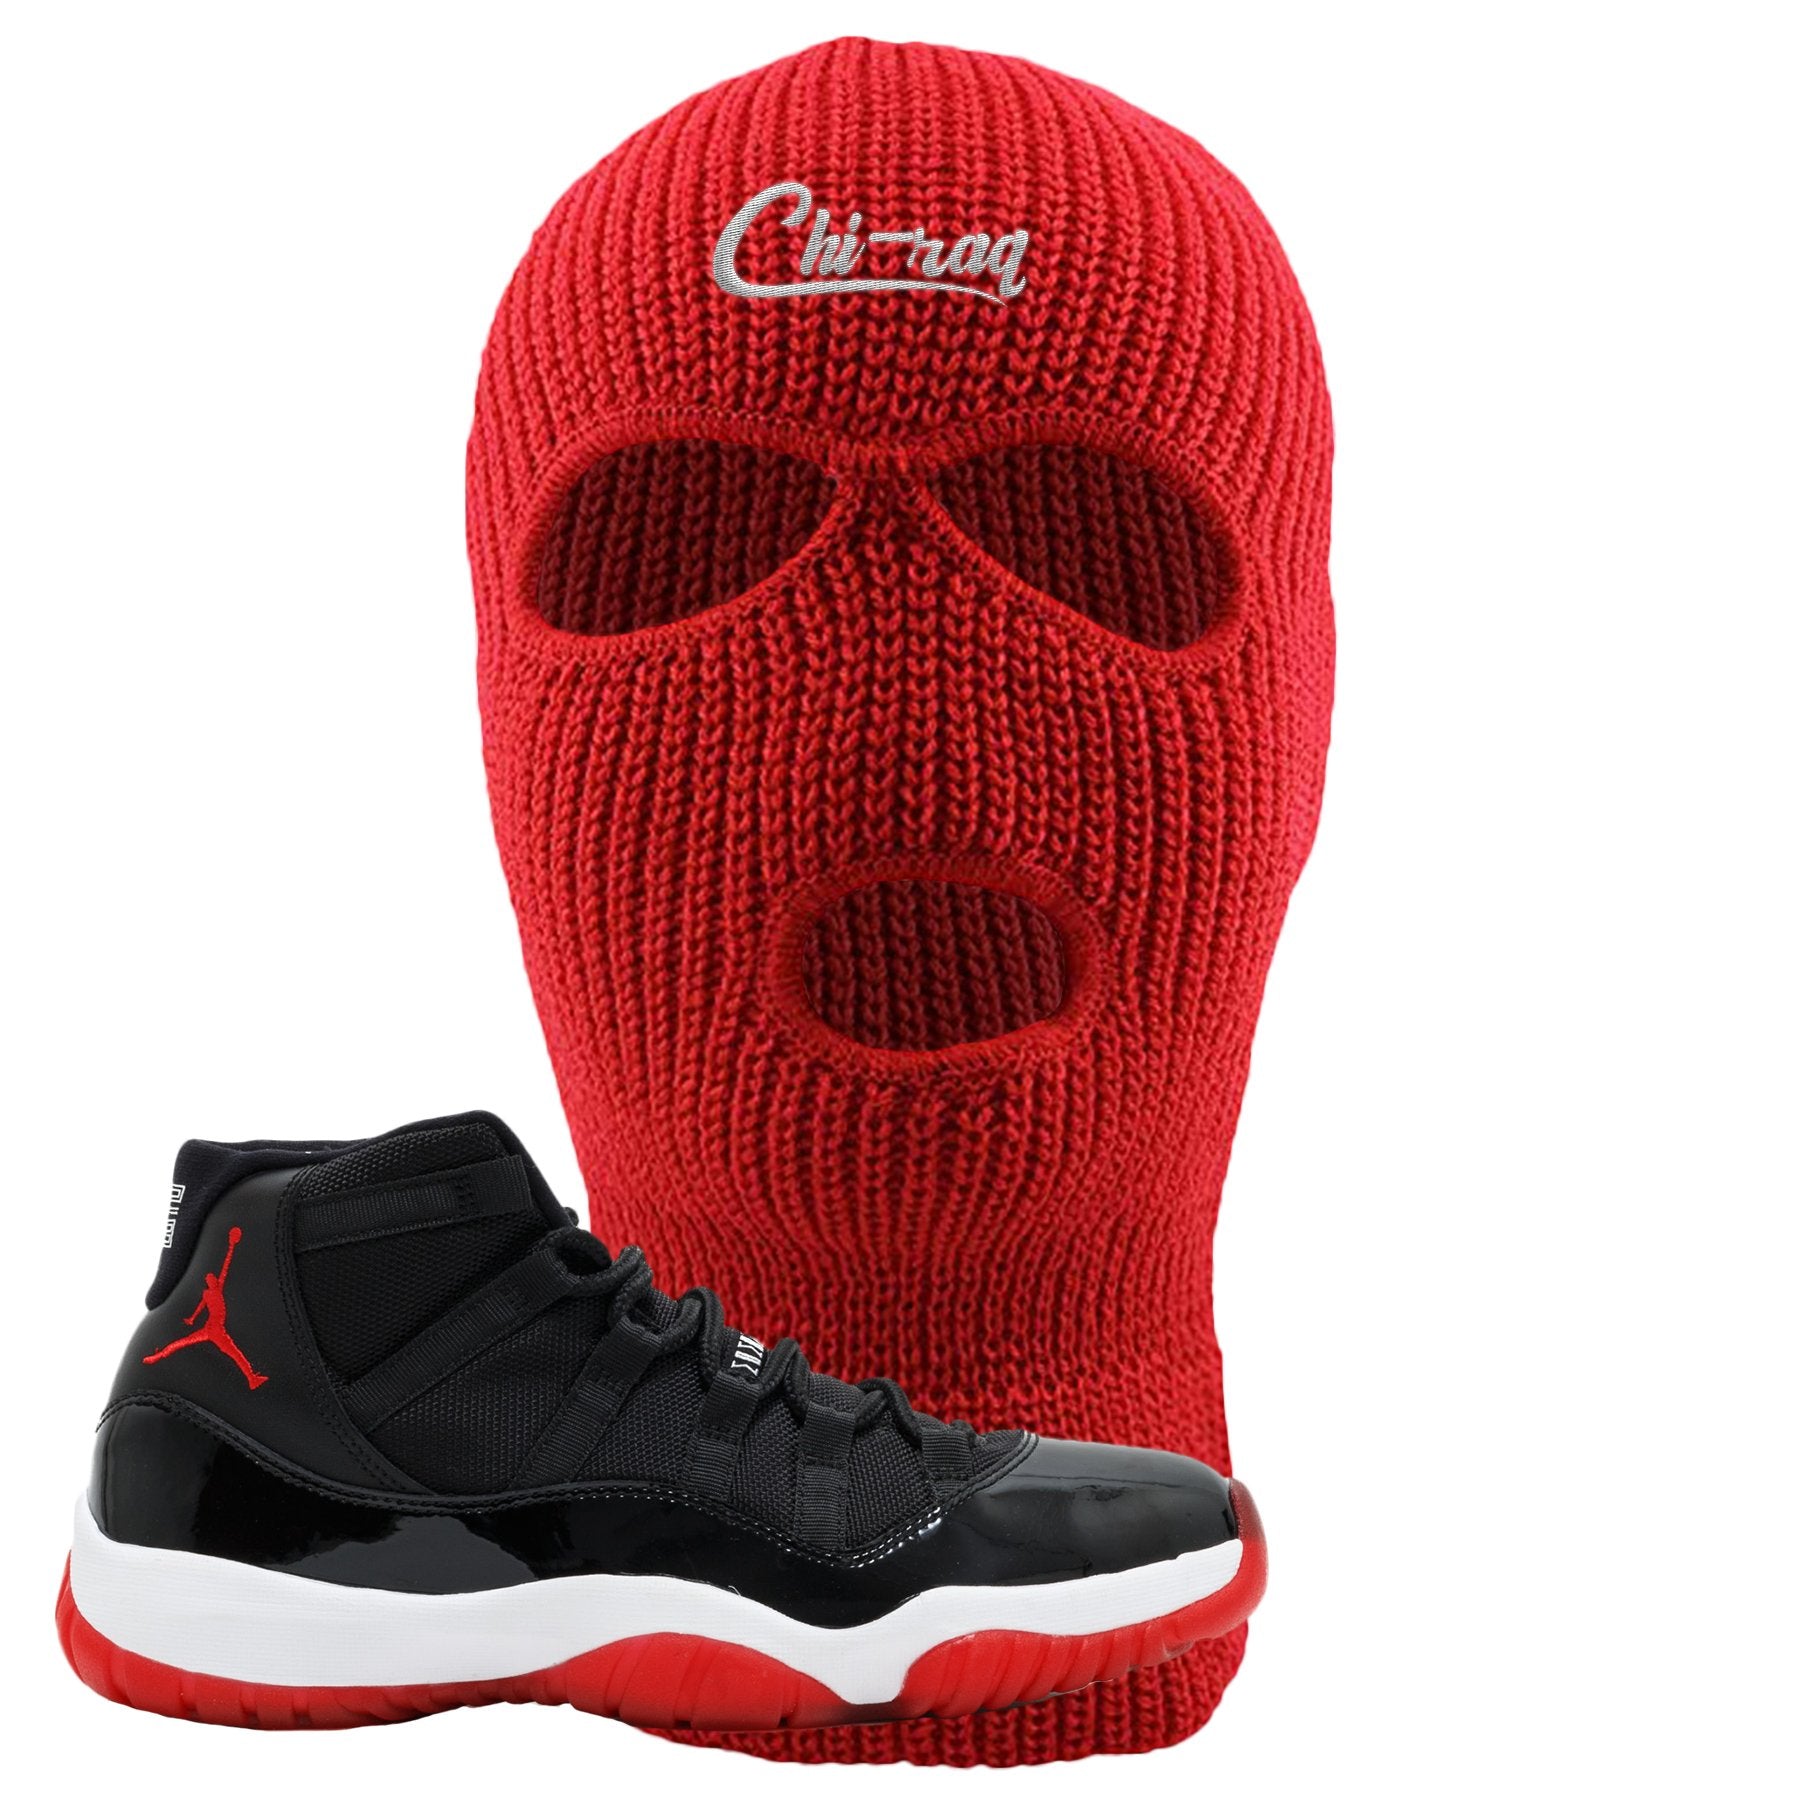 Jordan 11 Bred Chi-raq Red Sneaker Matching Ski Mask